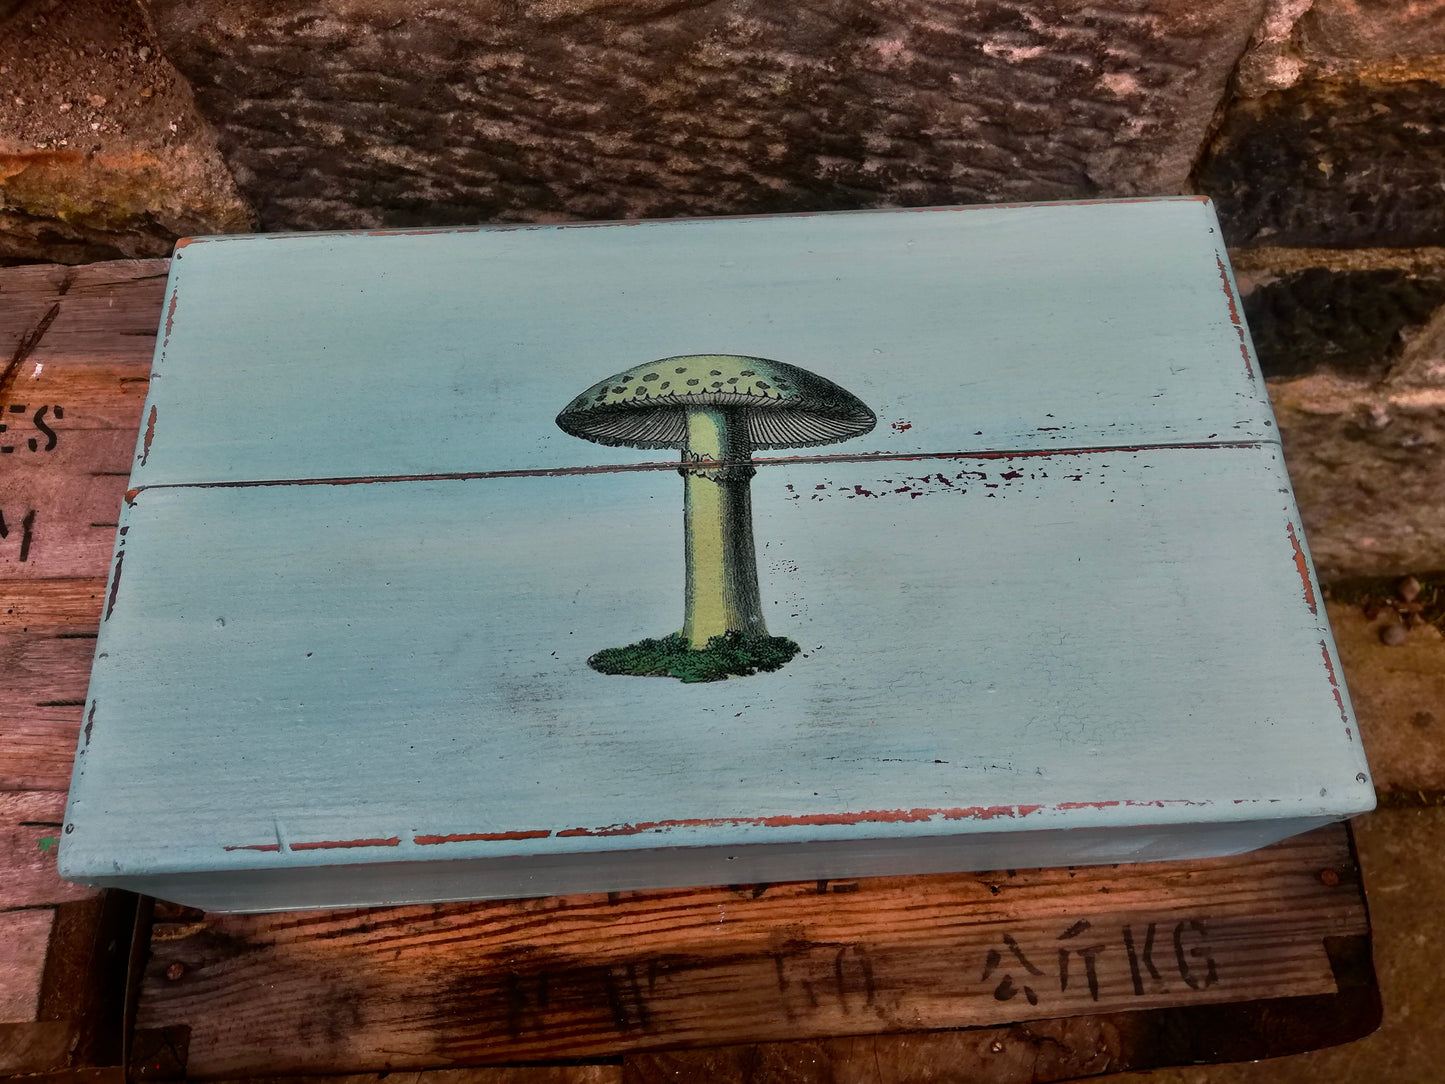 Vintage wooden box with mushroom design